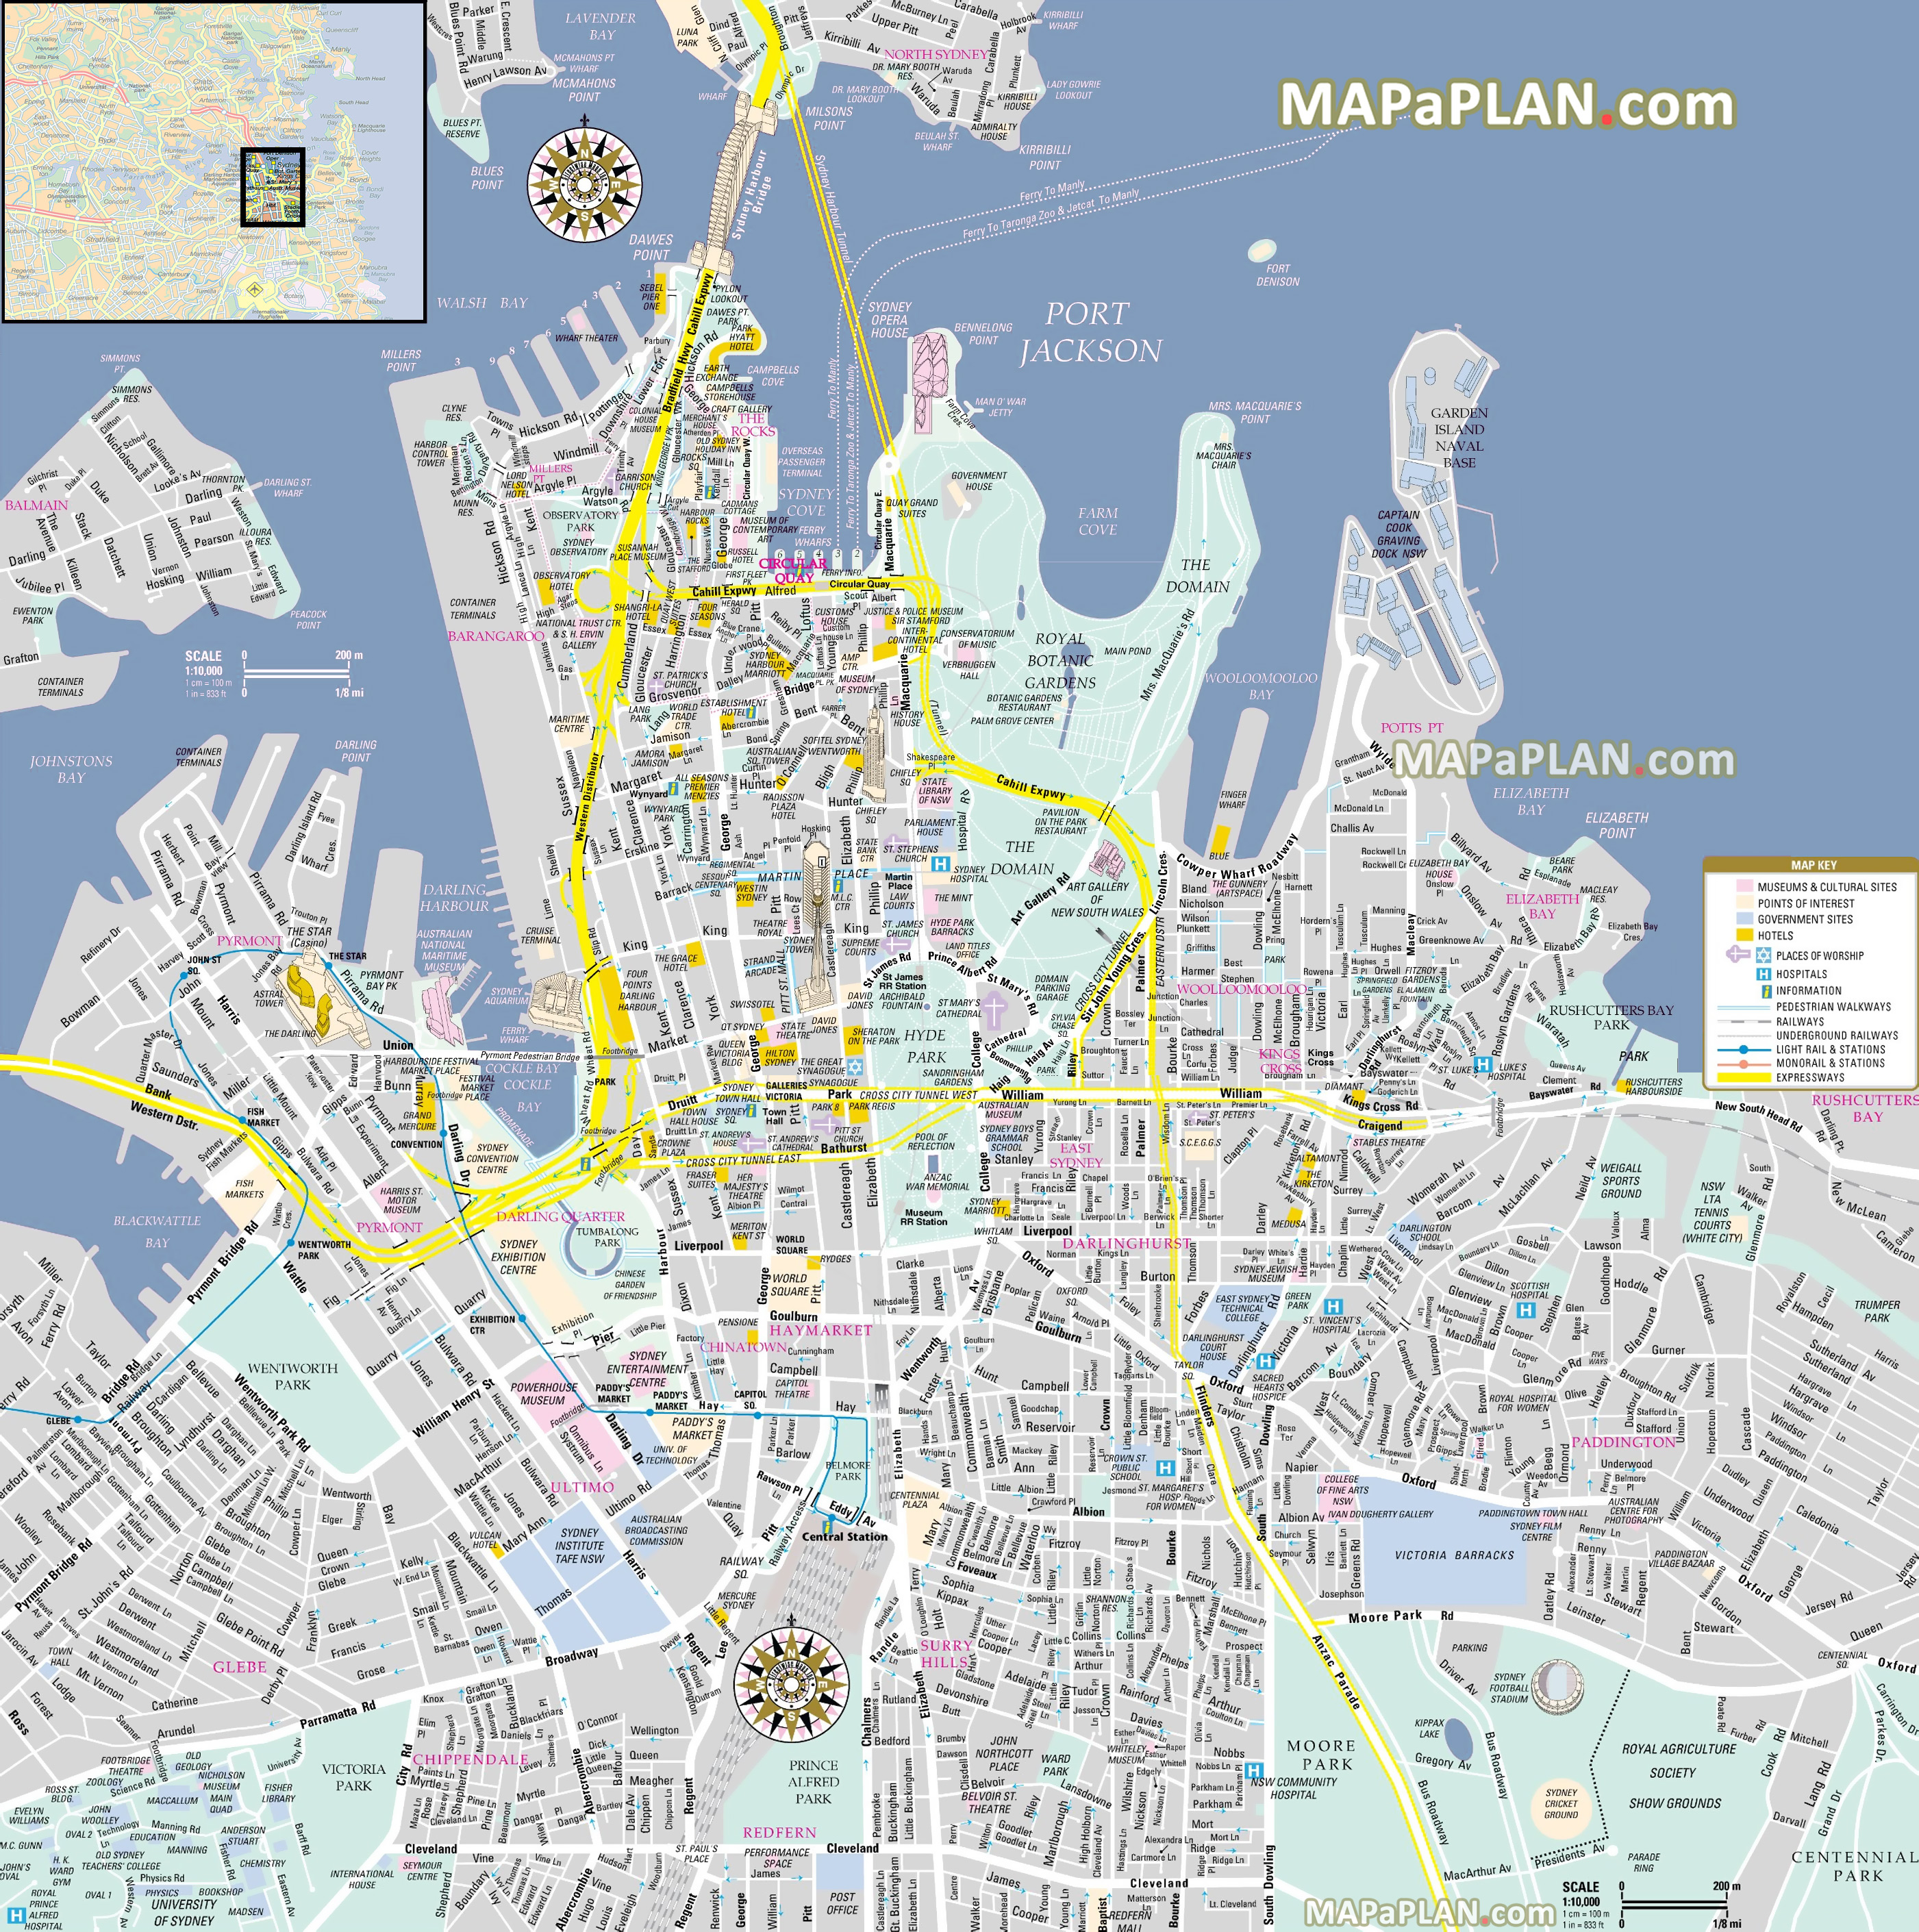 Maps Update 30001569: Tourist Map of Sydney \u2013 Sydney maps 